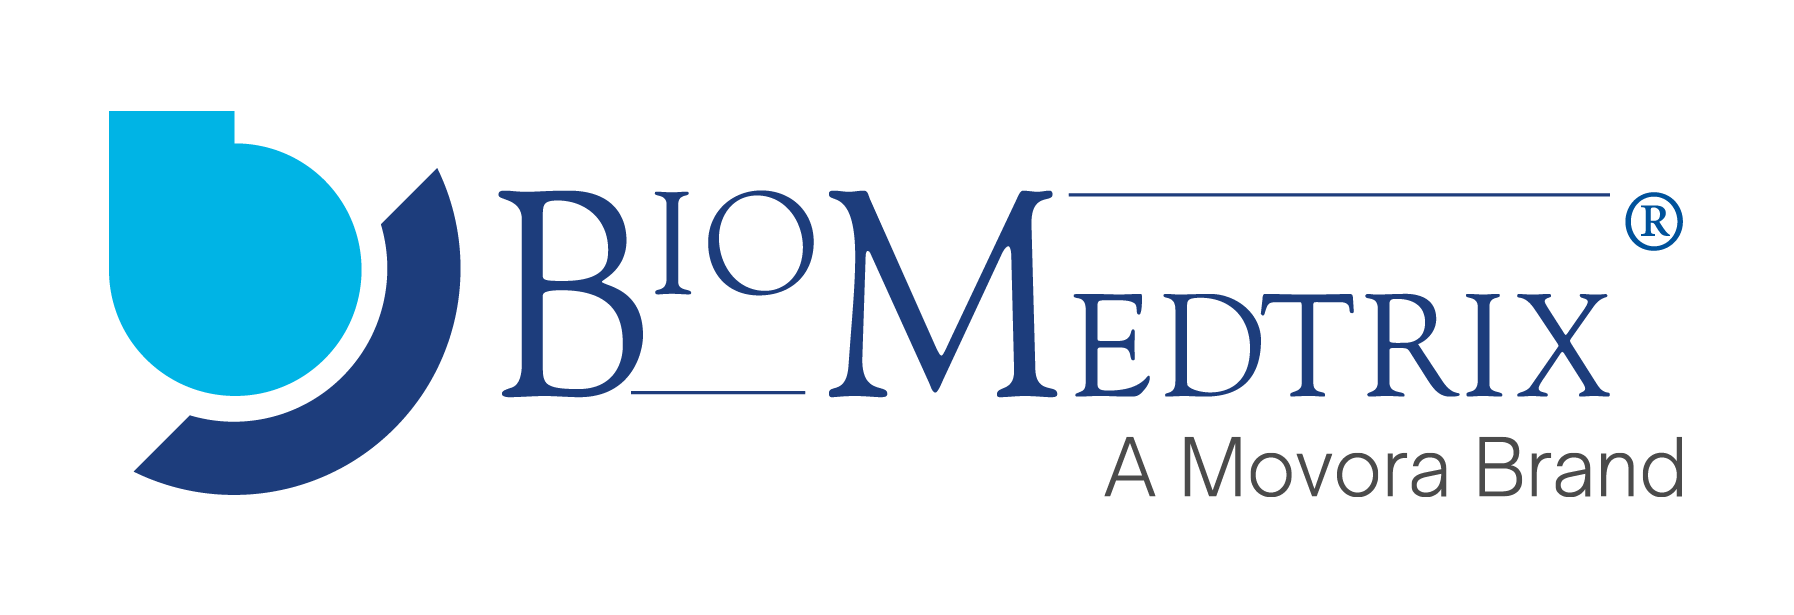 BioMedtrix Logo